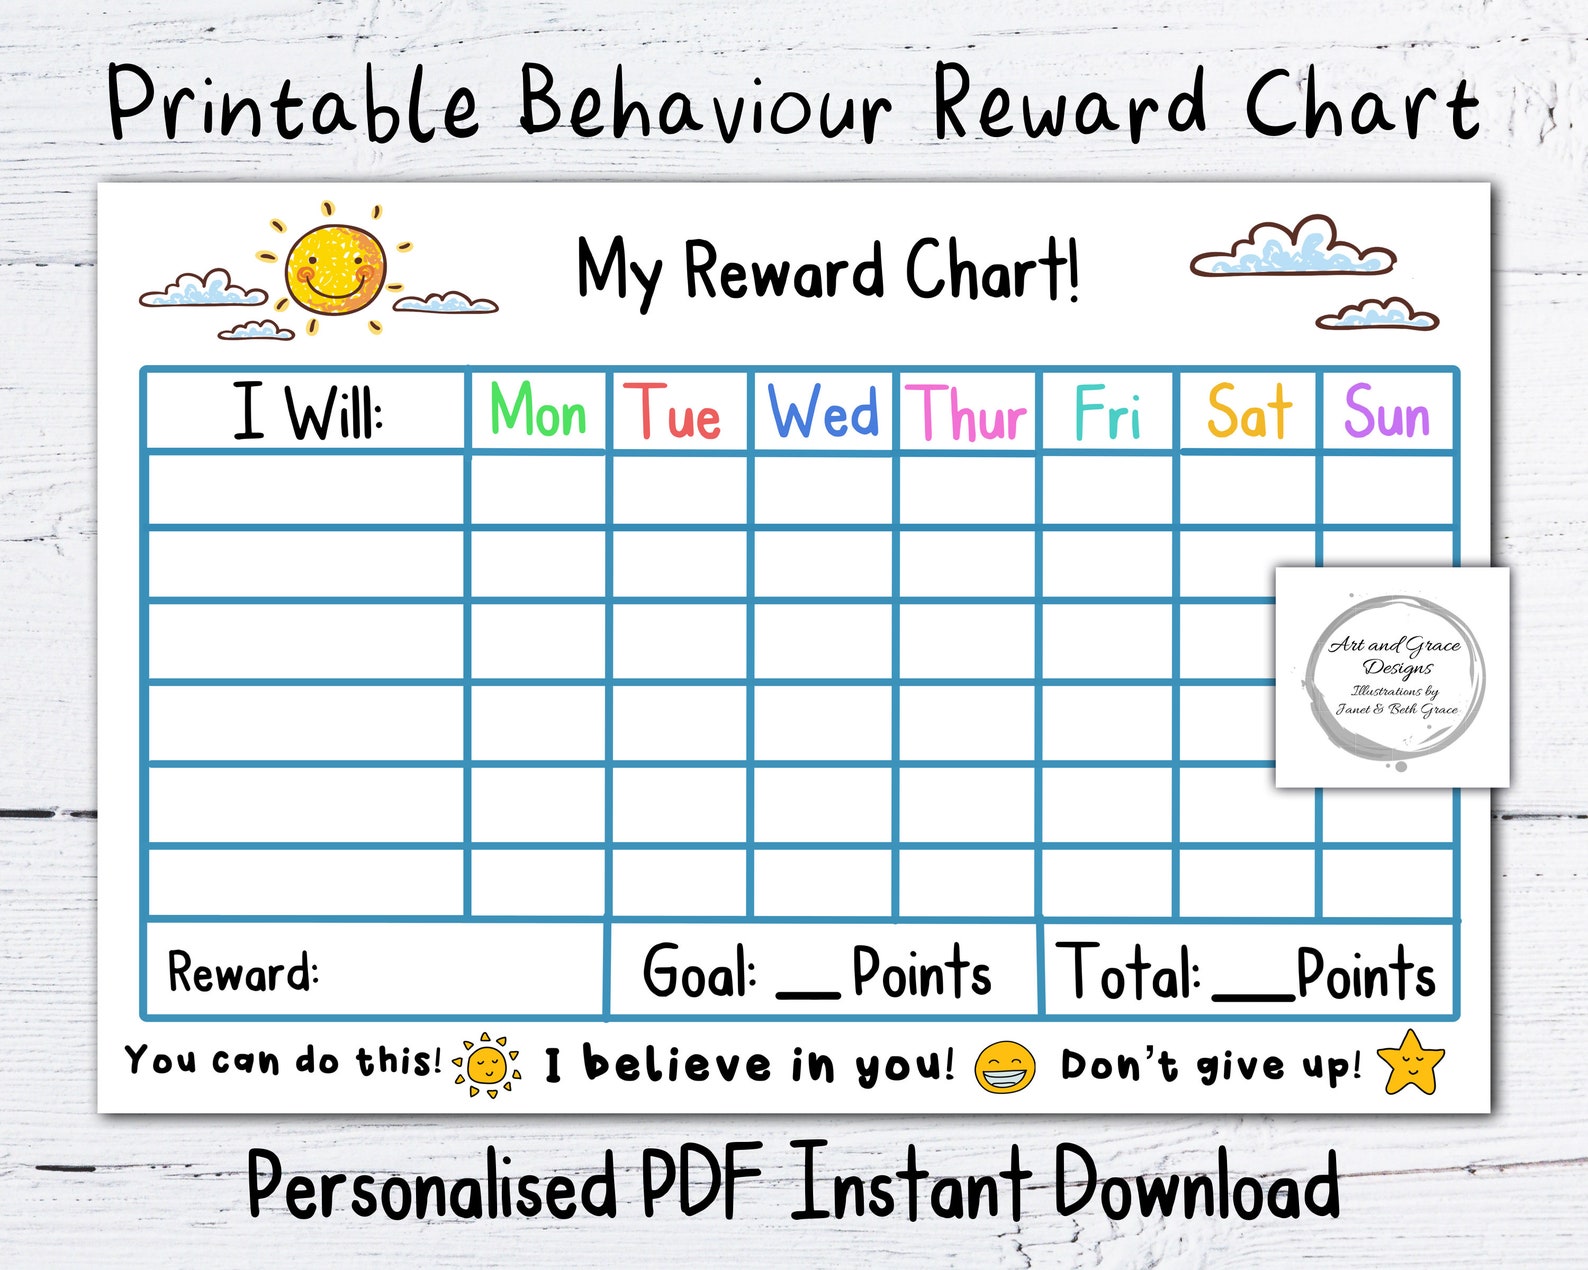 Printable PDF Reward Chart Personalised Instant Download - Etsy